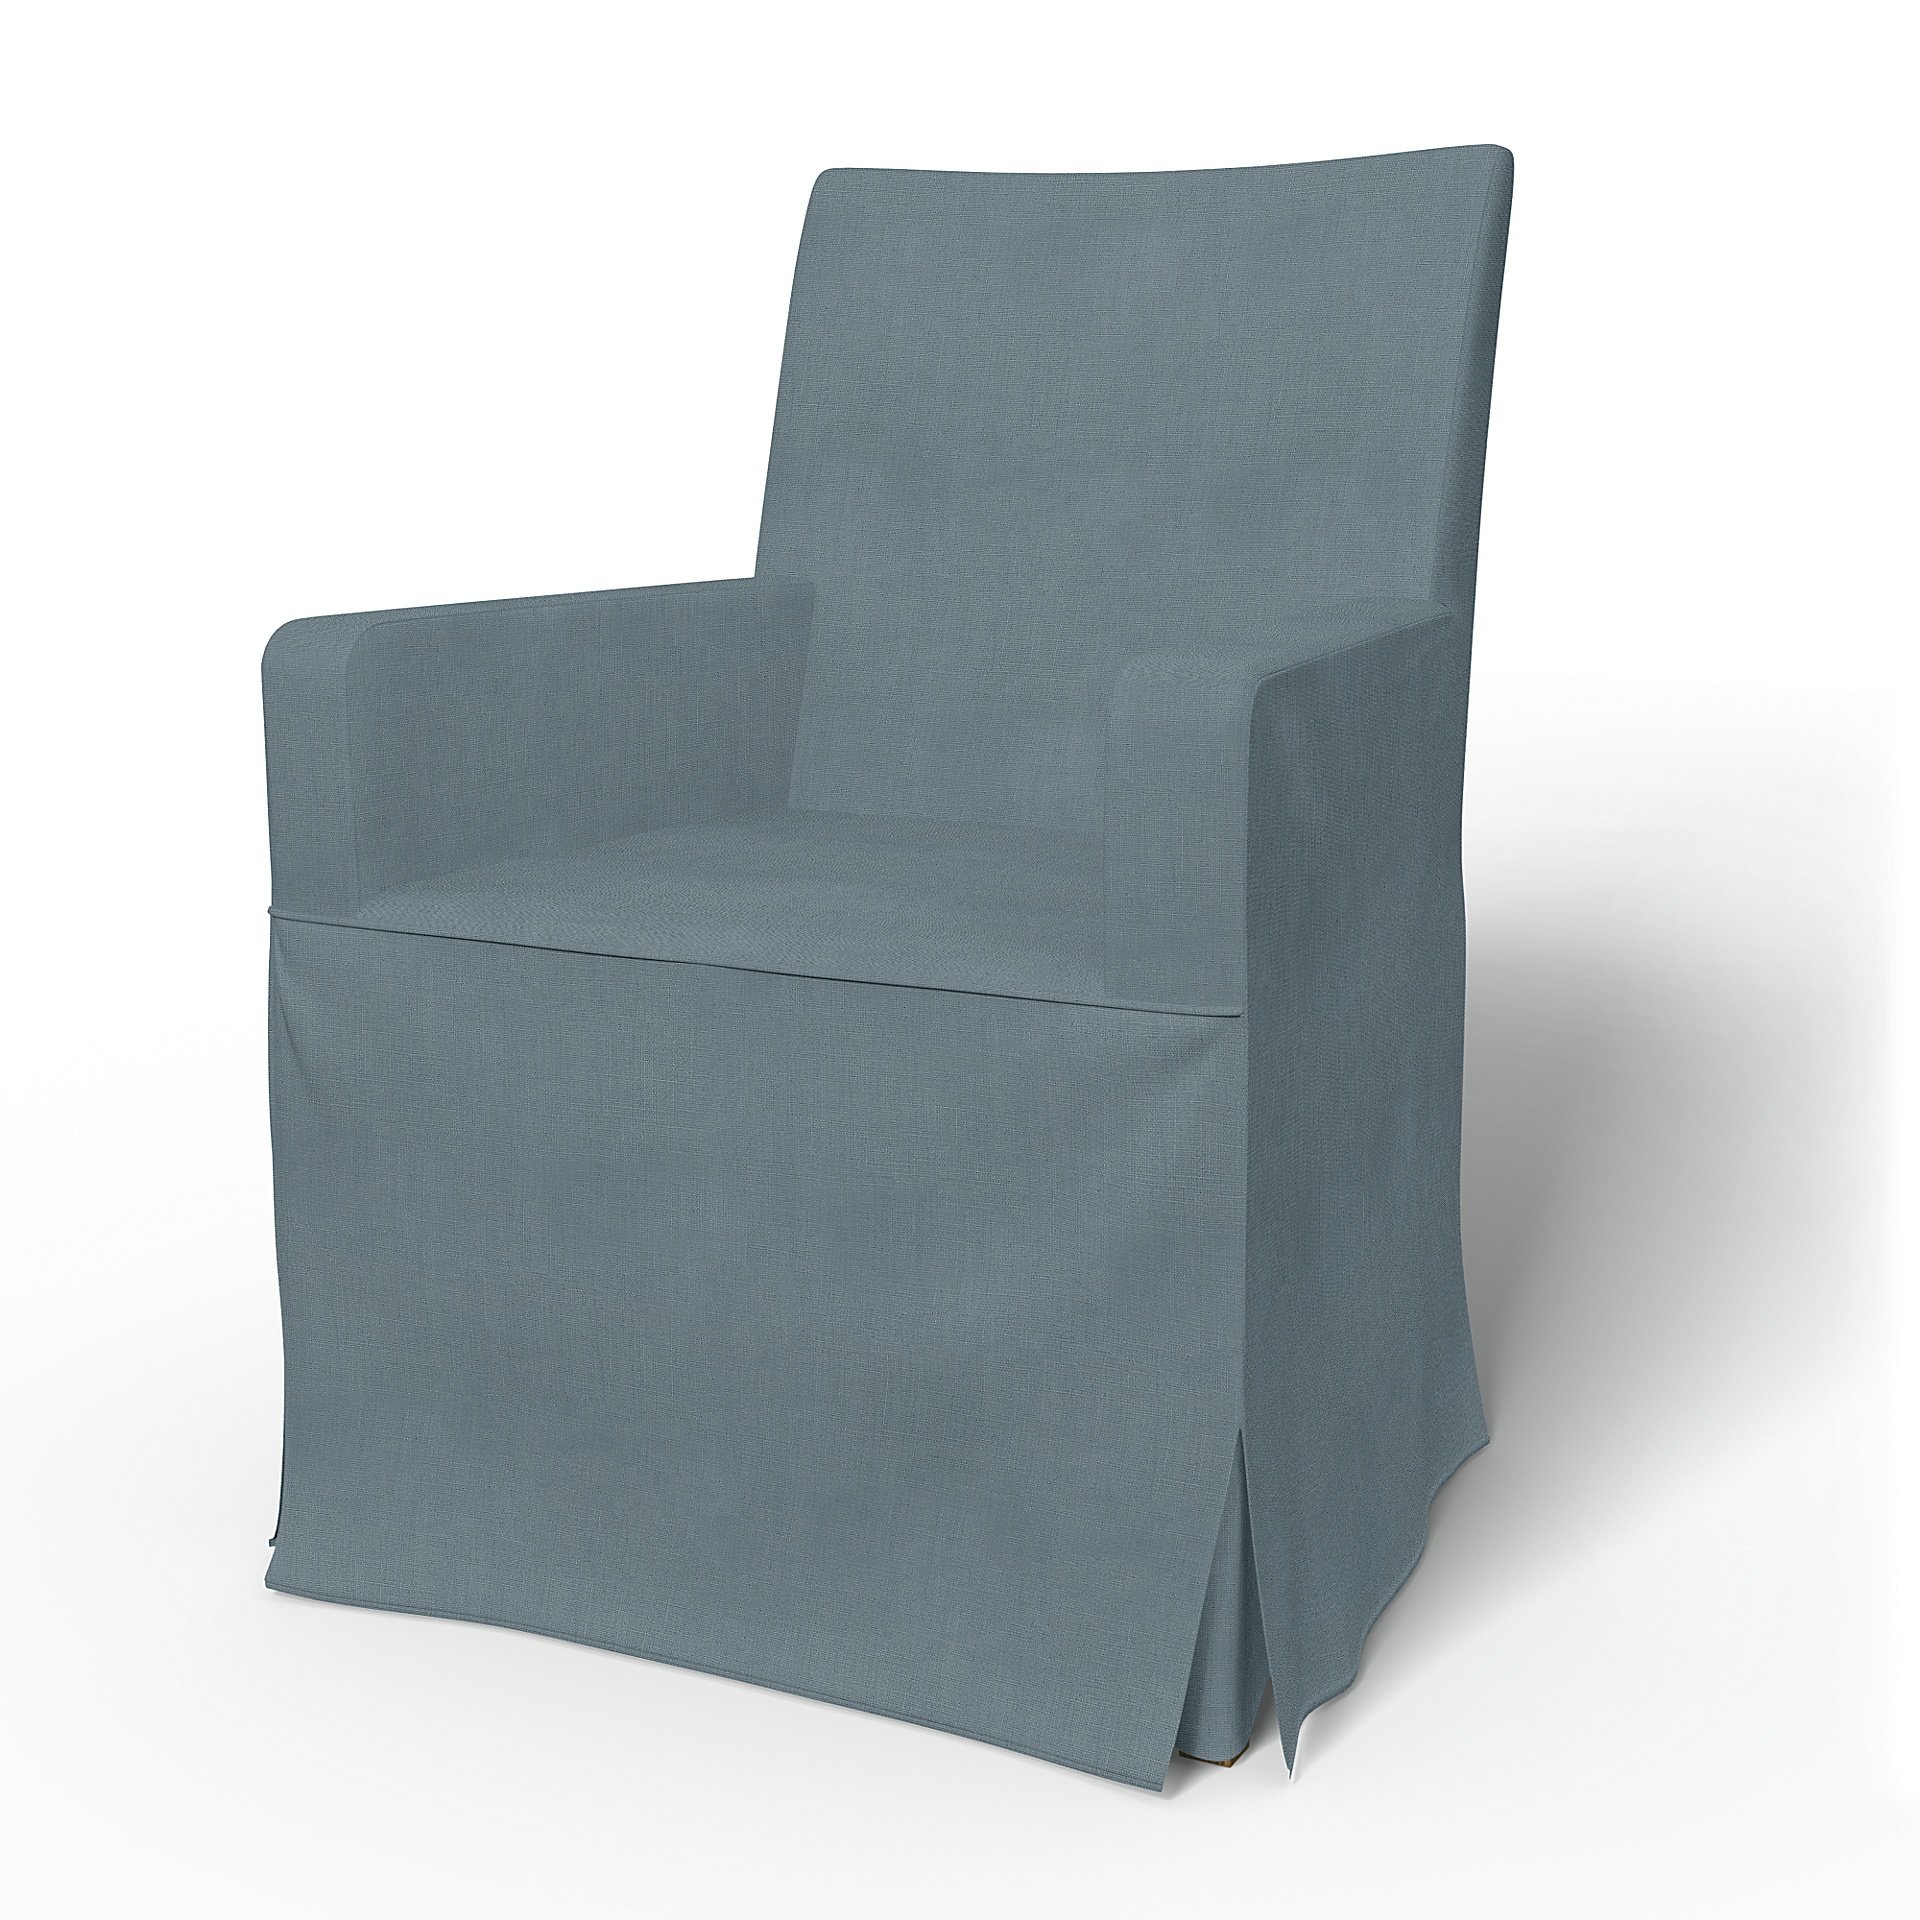 IKEA - Henriksdal, Chair cover w/ armrests, long skirt box pleat, Dusk, Linen - Bemz